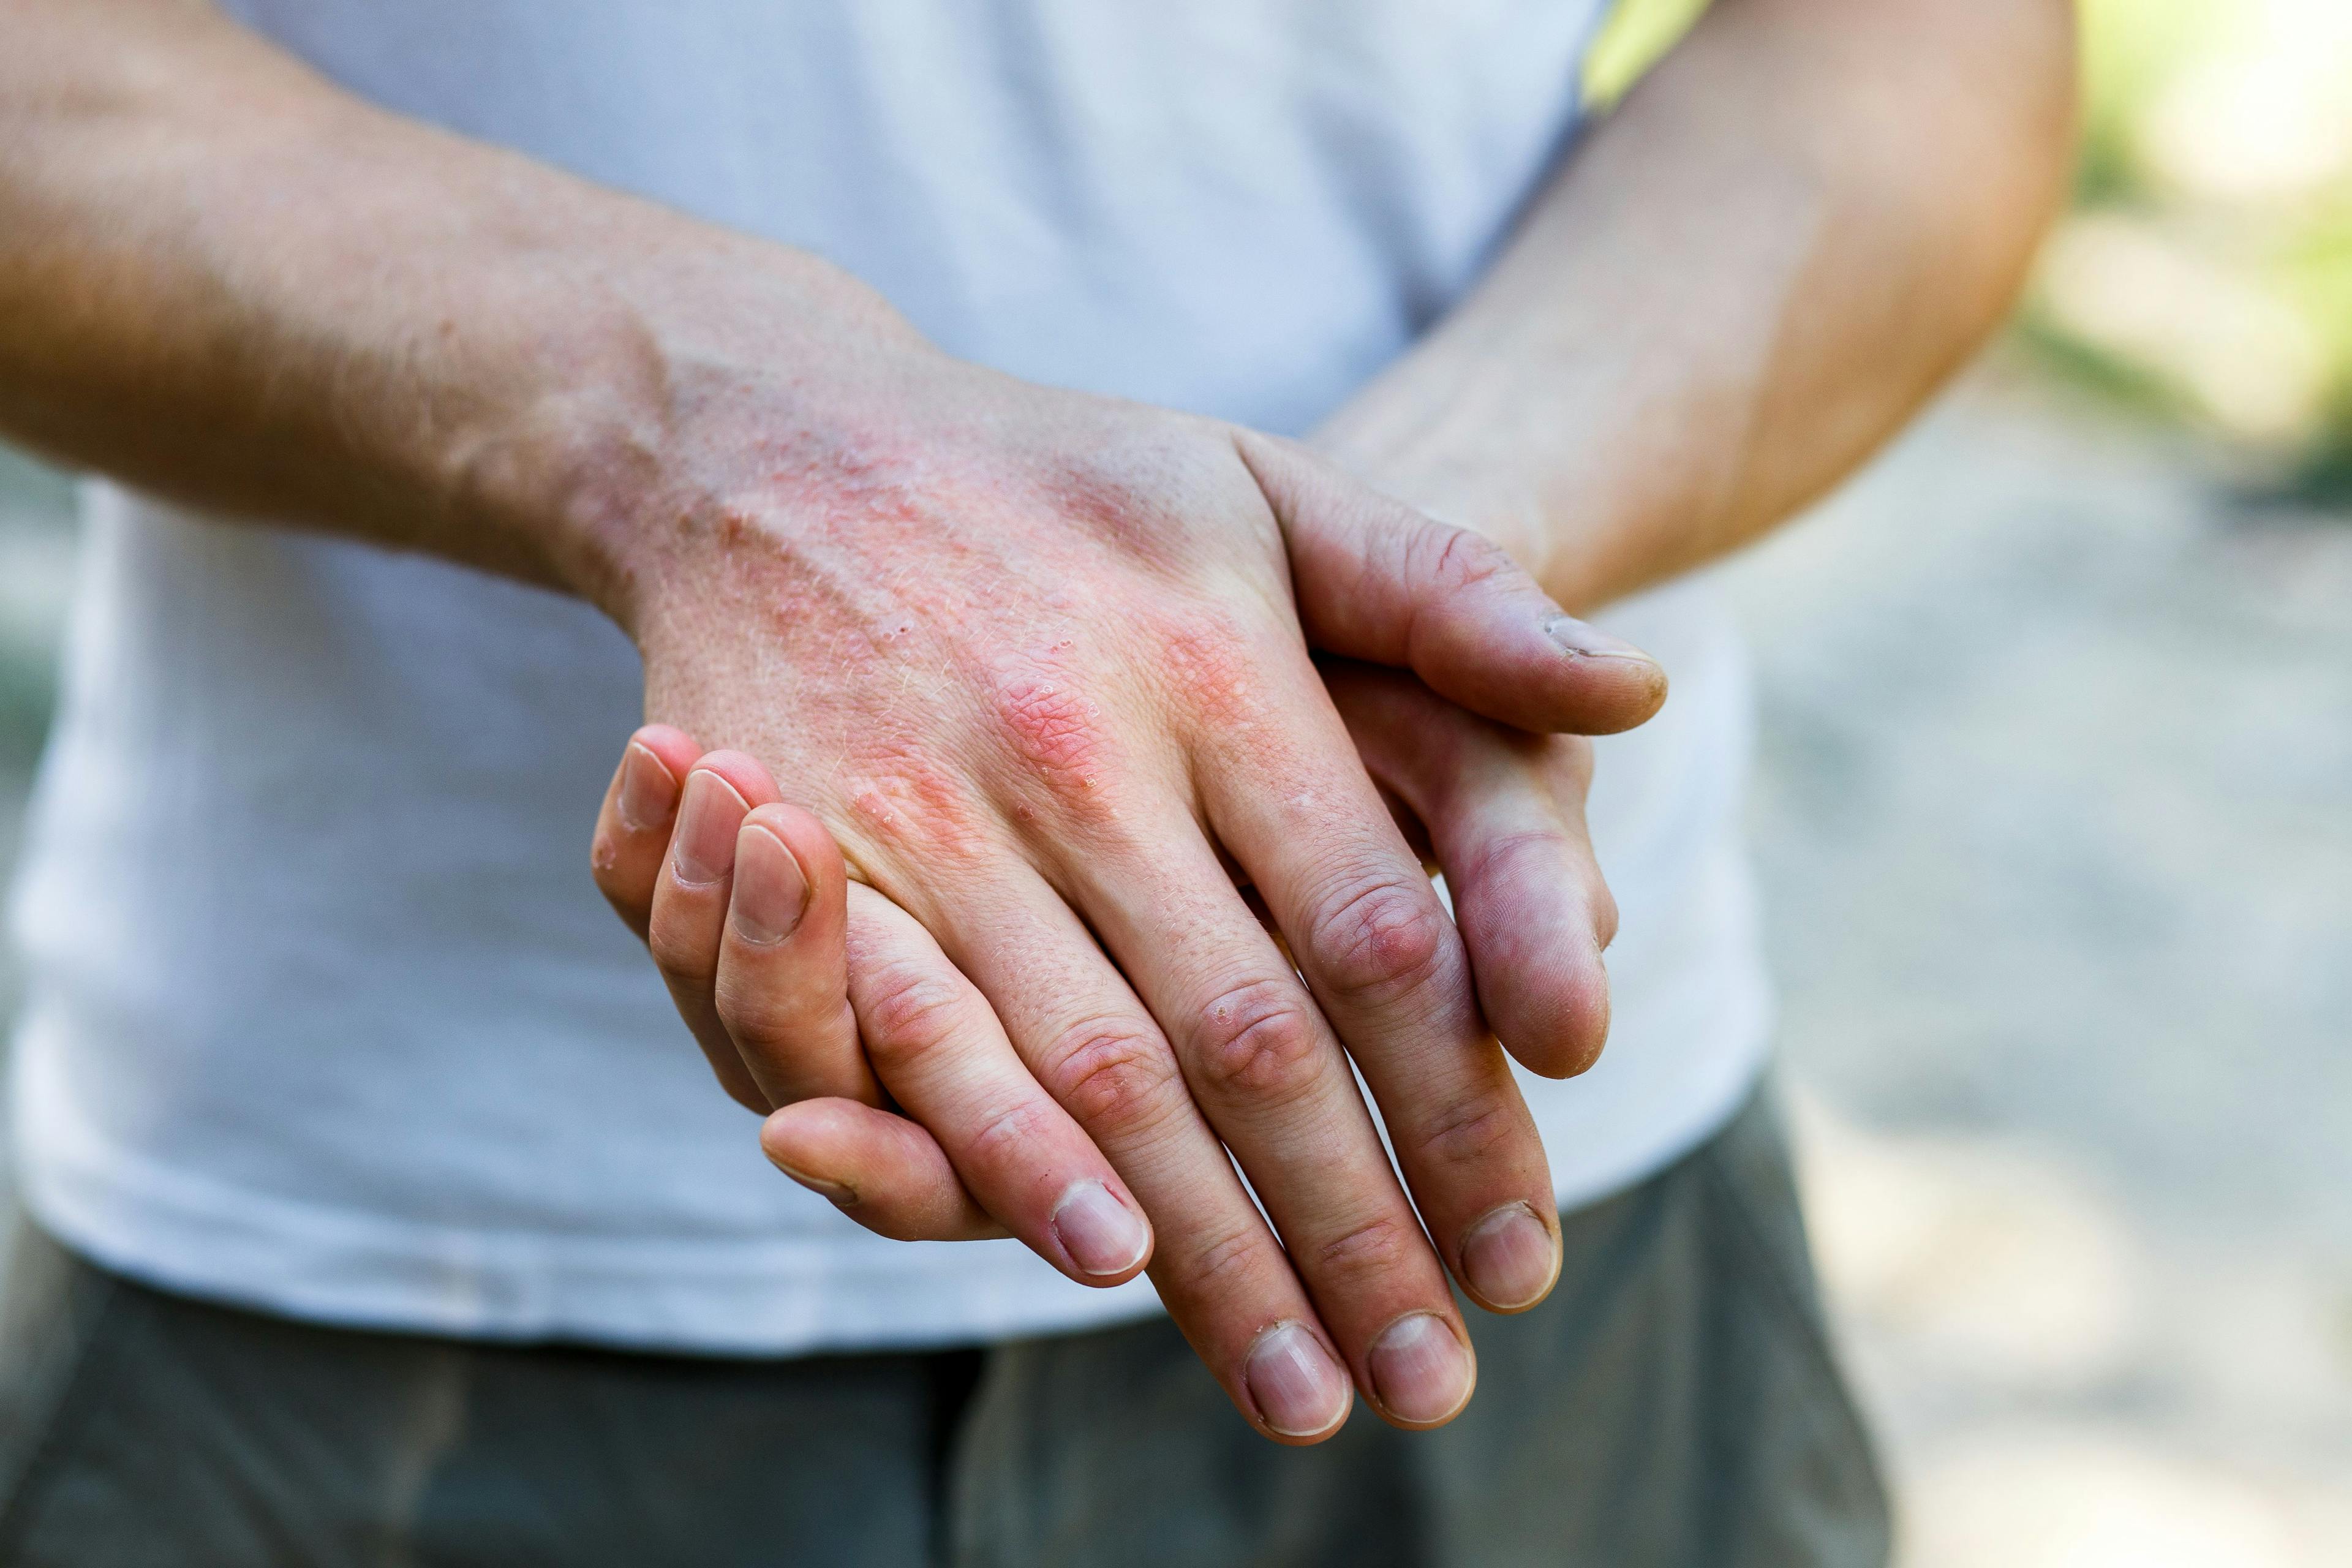 man's hands with atopic dermatitis | Image Credit: Ольга Тернавская - stock.adobe.com